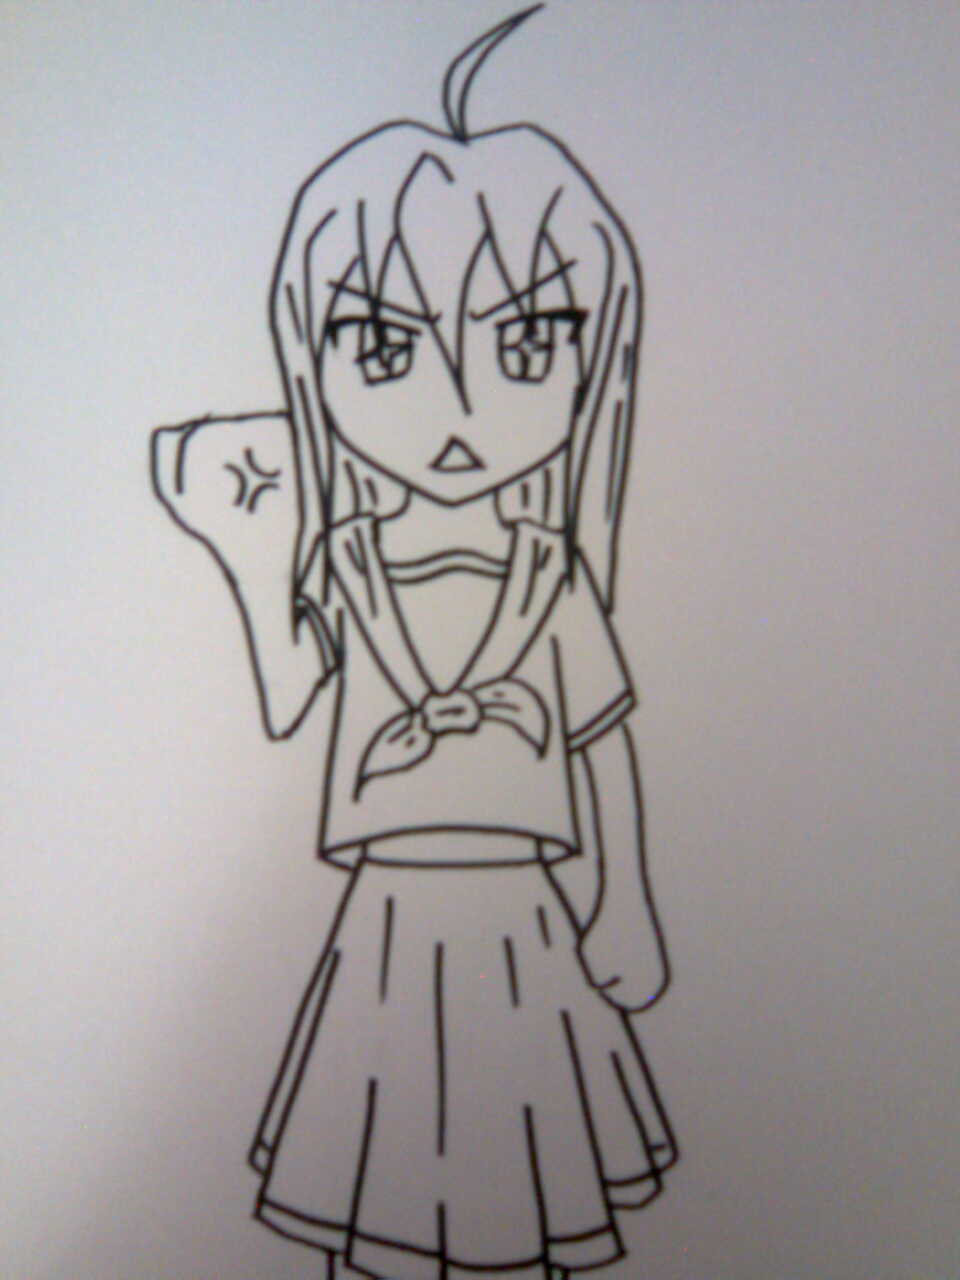 Angry school girl by DiKun